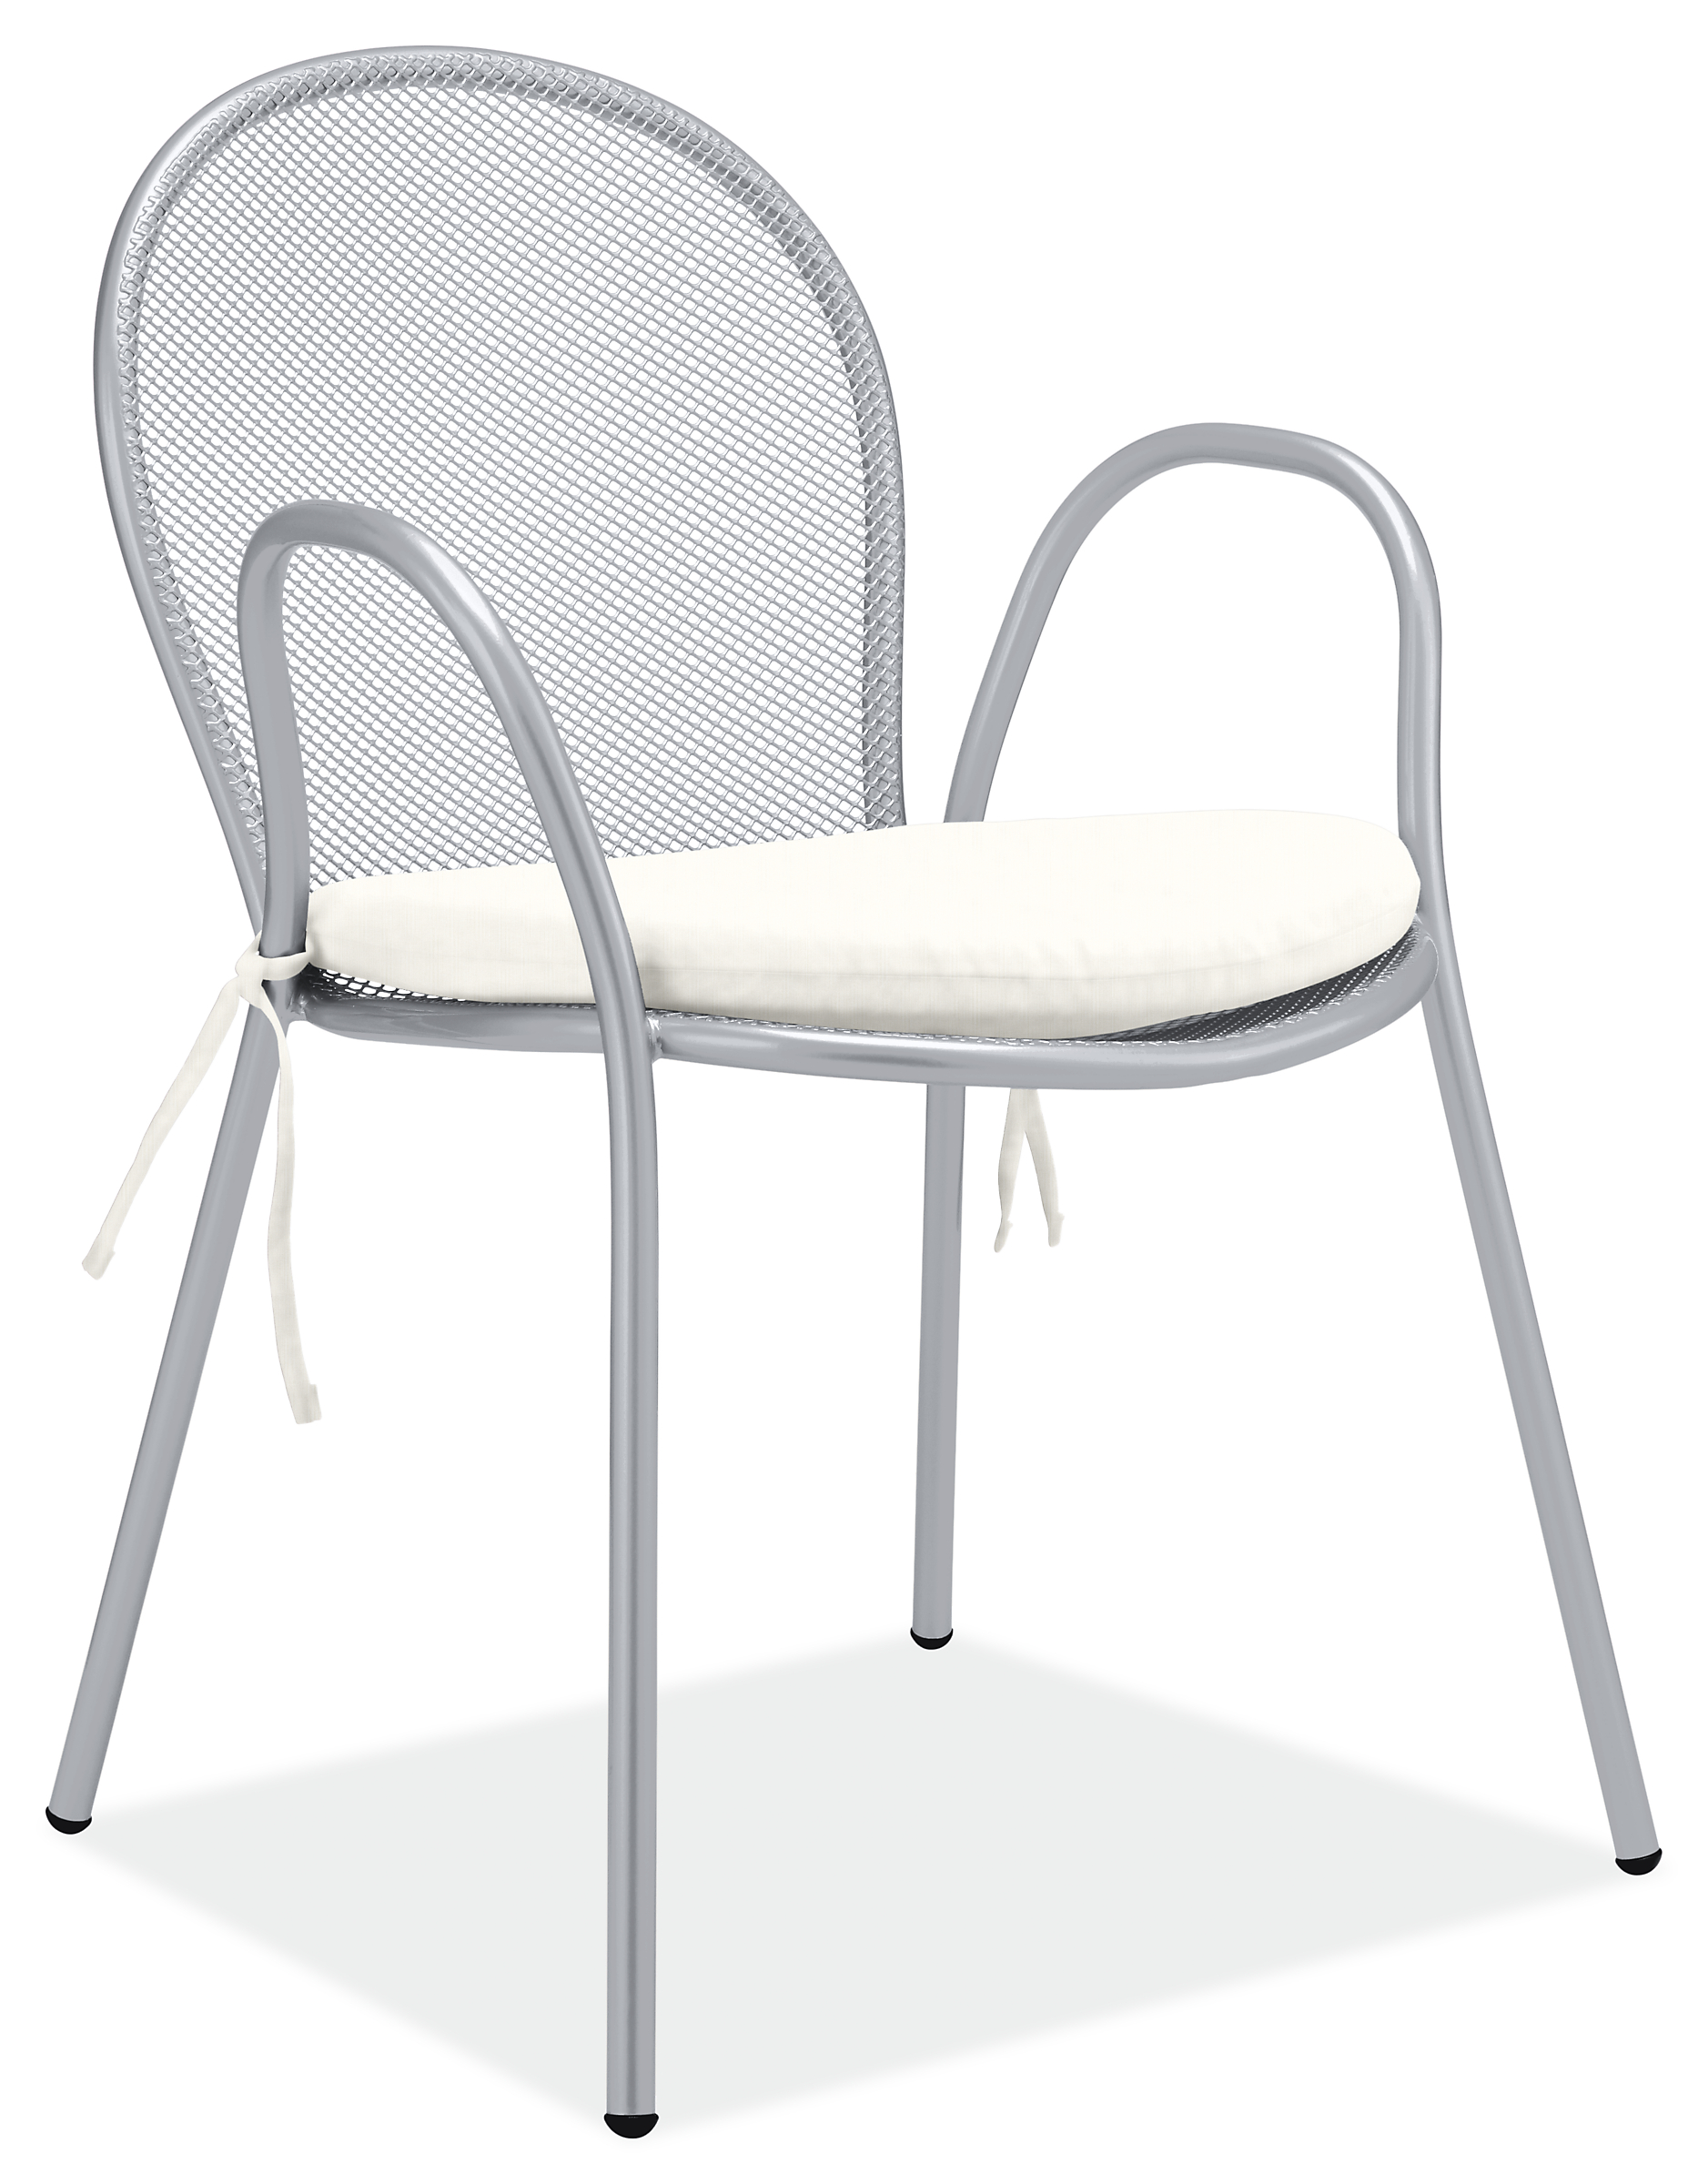 Rio Chair in Silver with Cushion in Sunbrella Canvas White